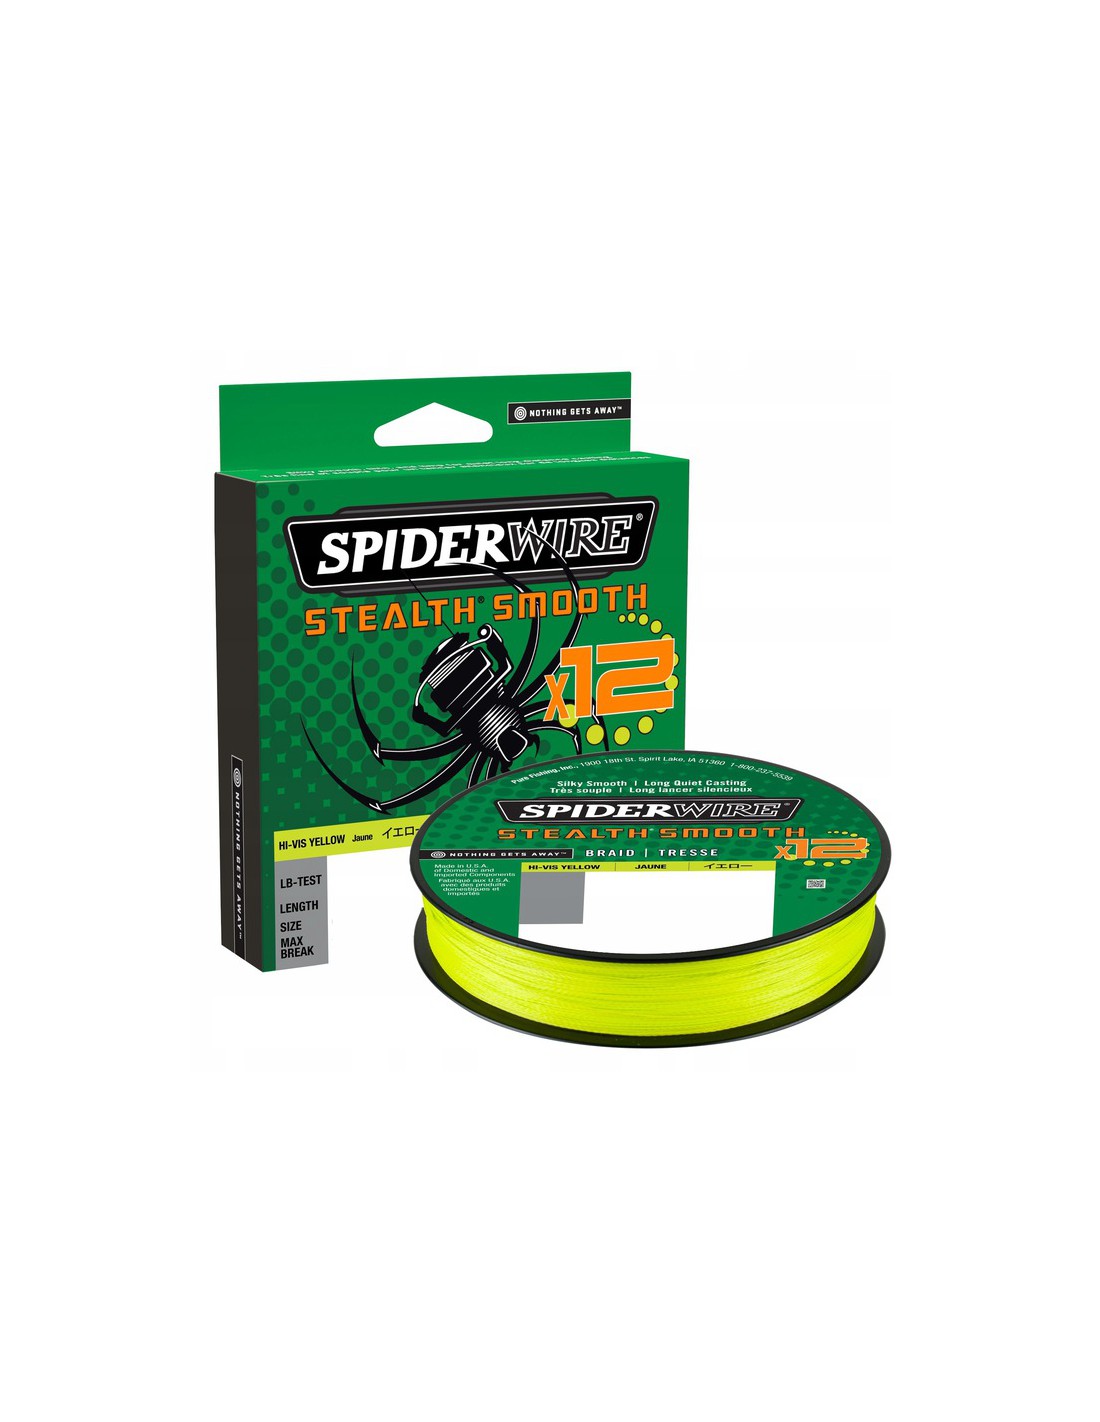 Spiderwire Stealth Smooth X12 0.15 150MT